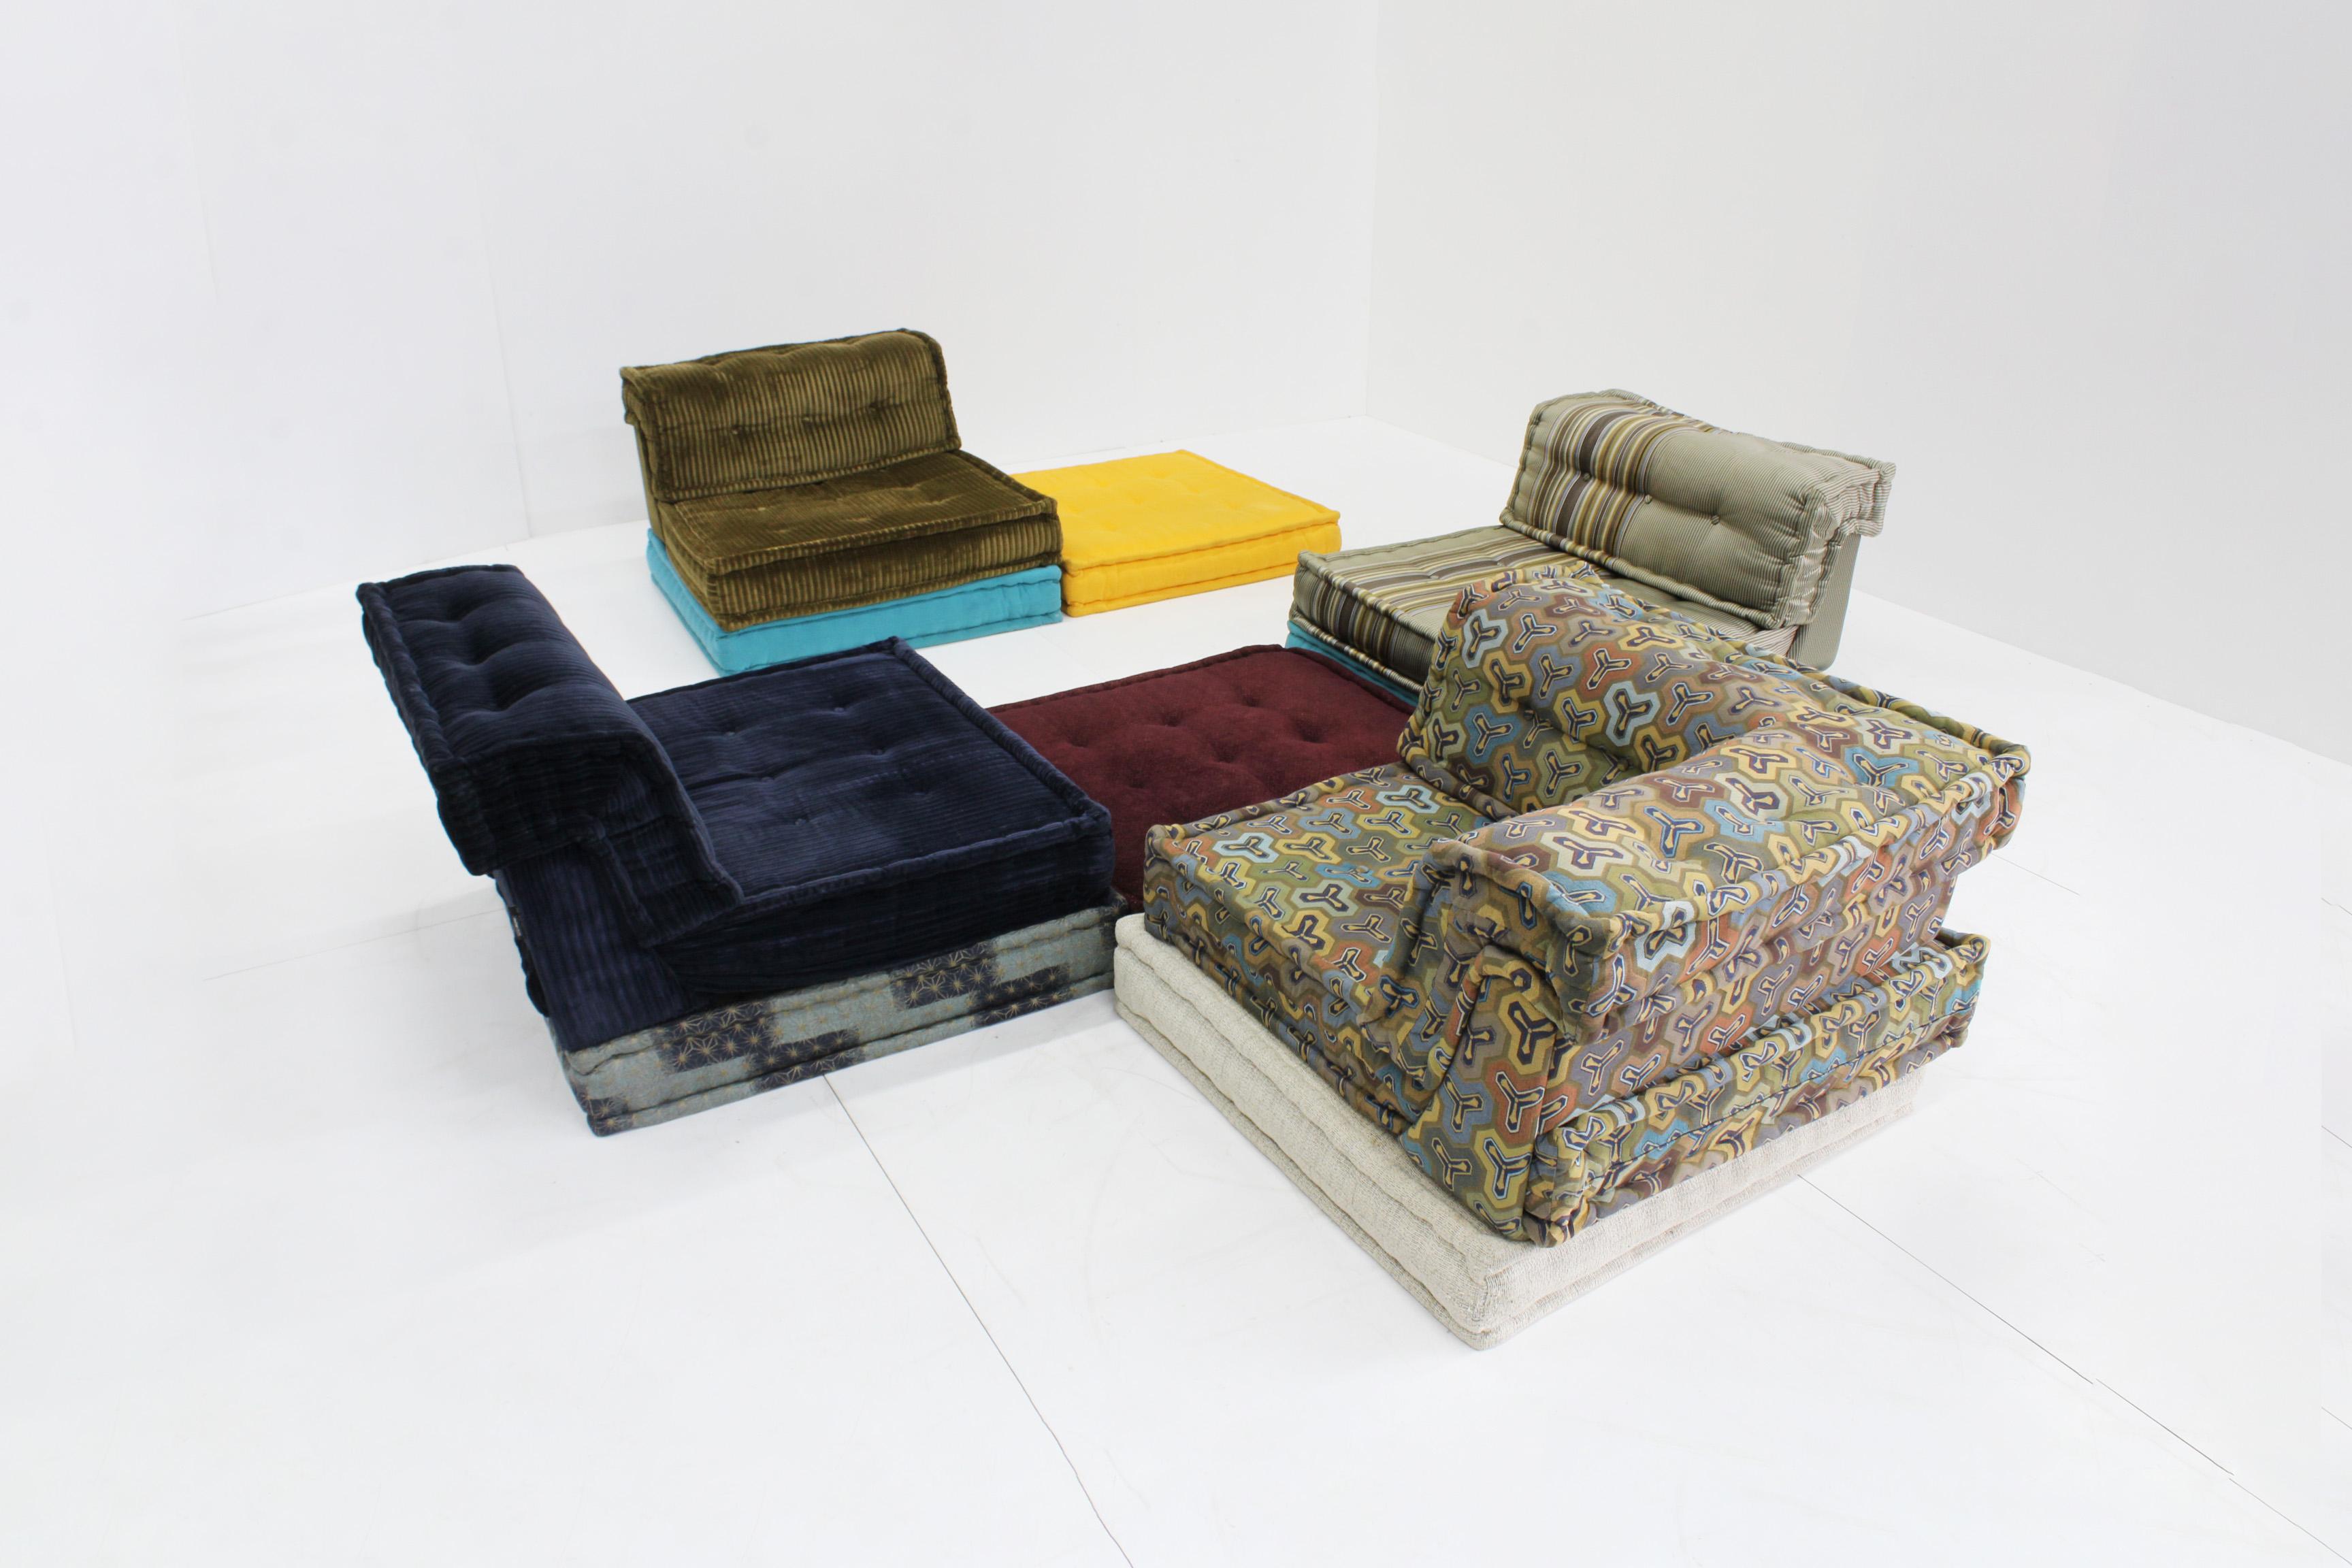 mah jong sofa for sale